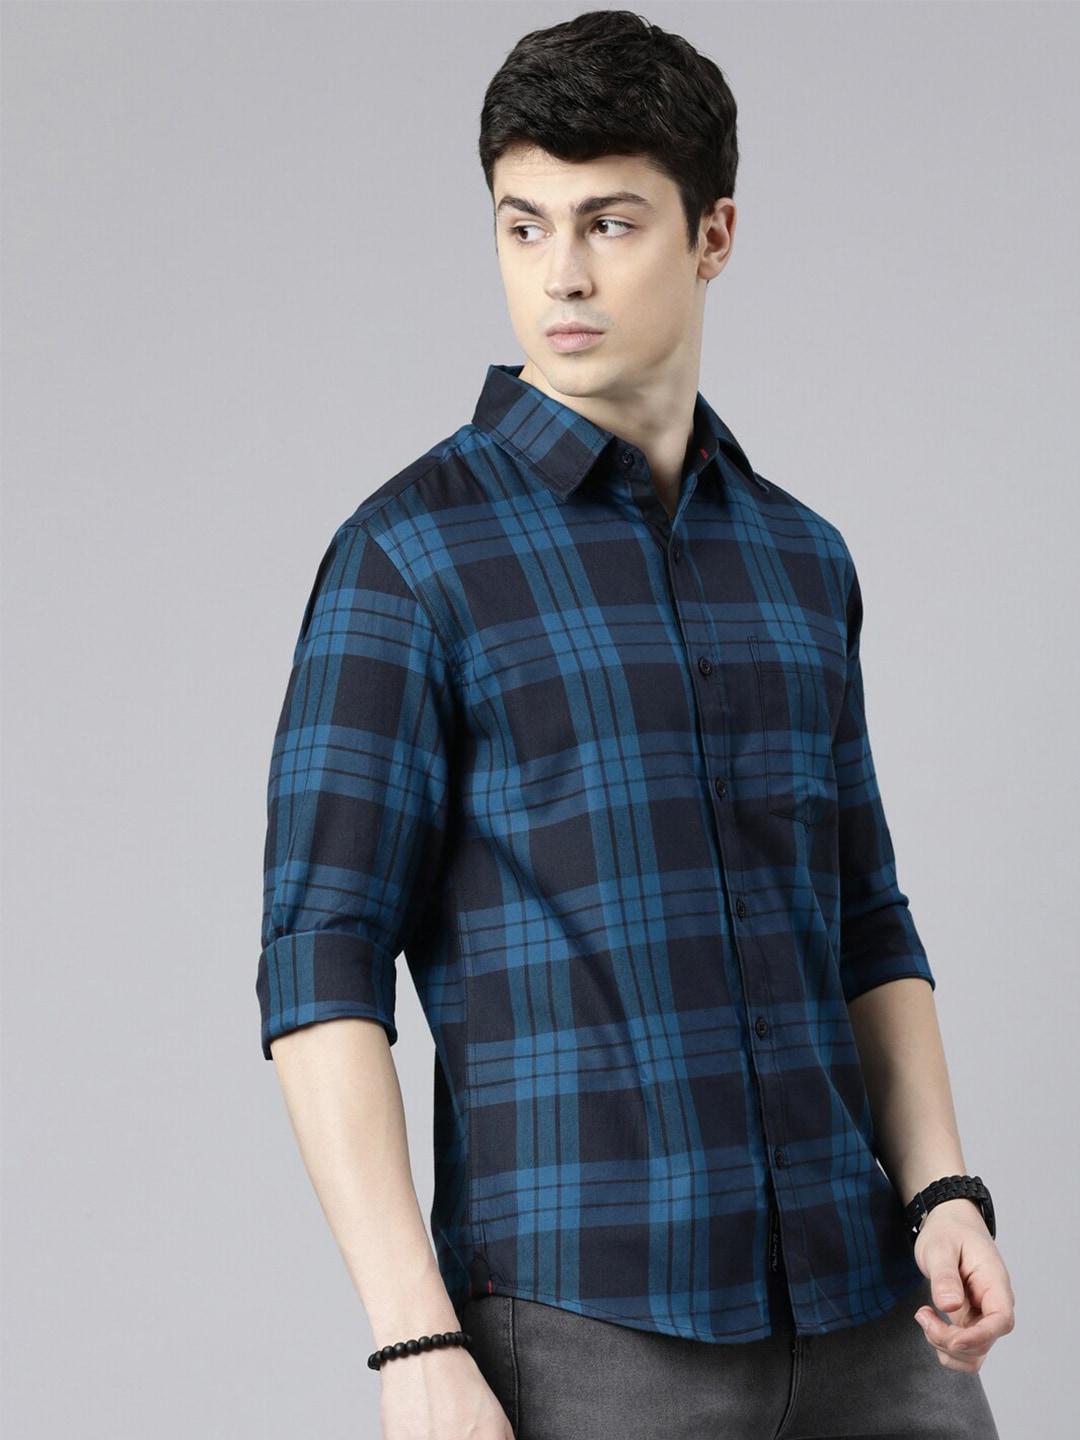 provogue-slim-fit-tartan-checks-spread-collar-long-sleeves-cotton-casual-shirt